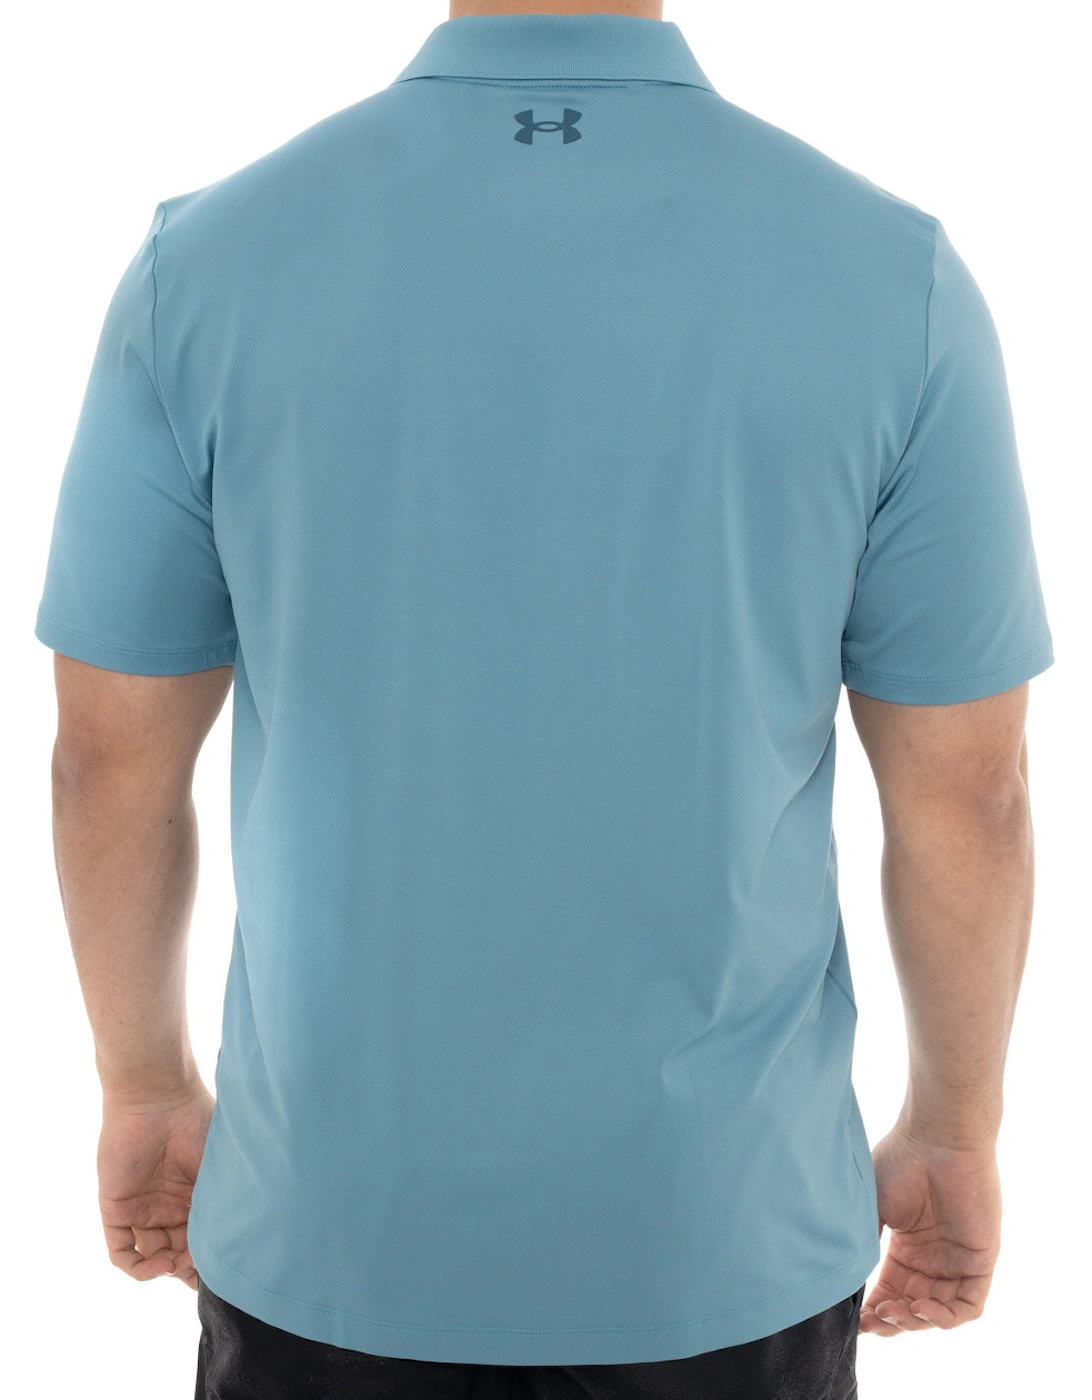 Mens Performance Polo Shirt (Blue)